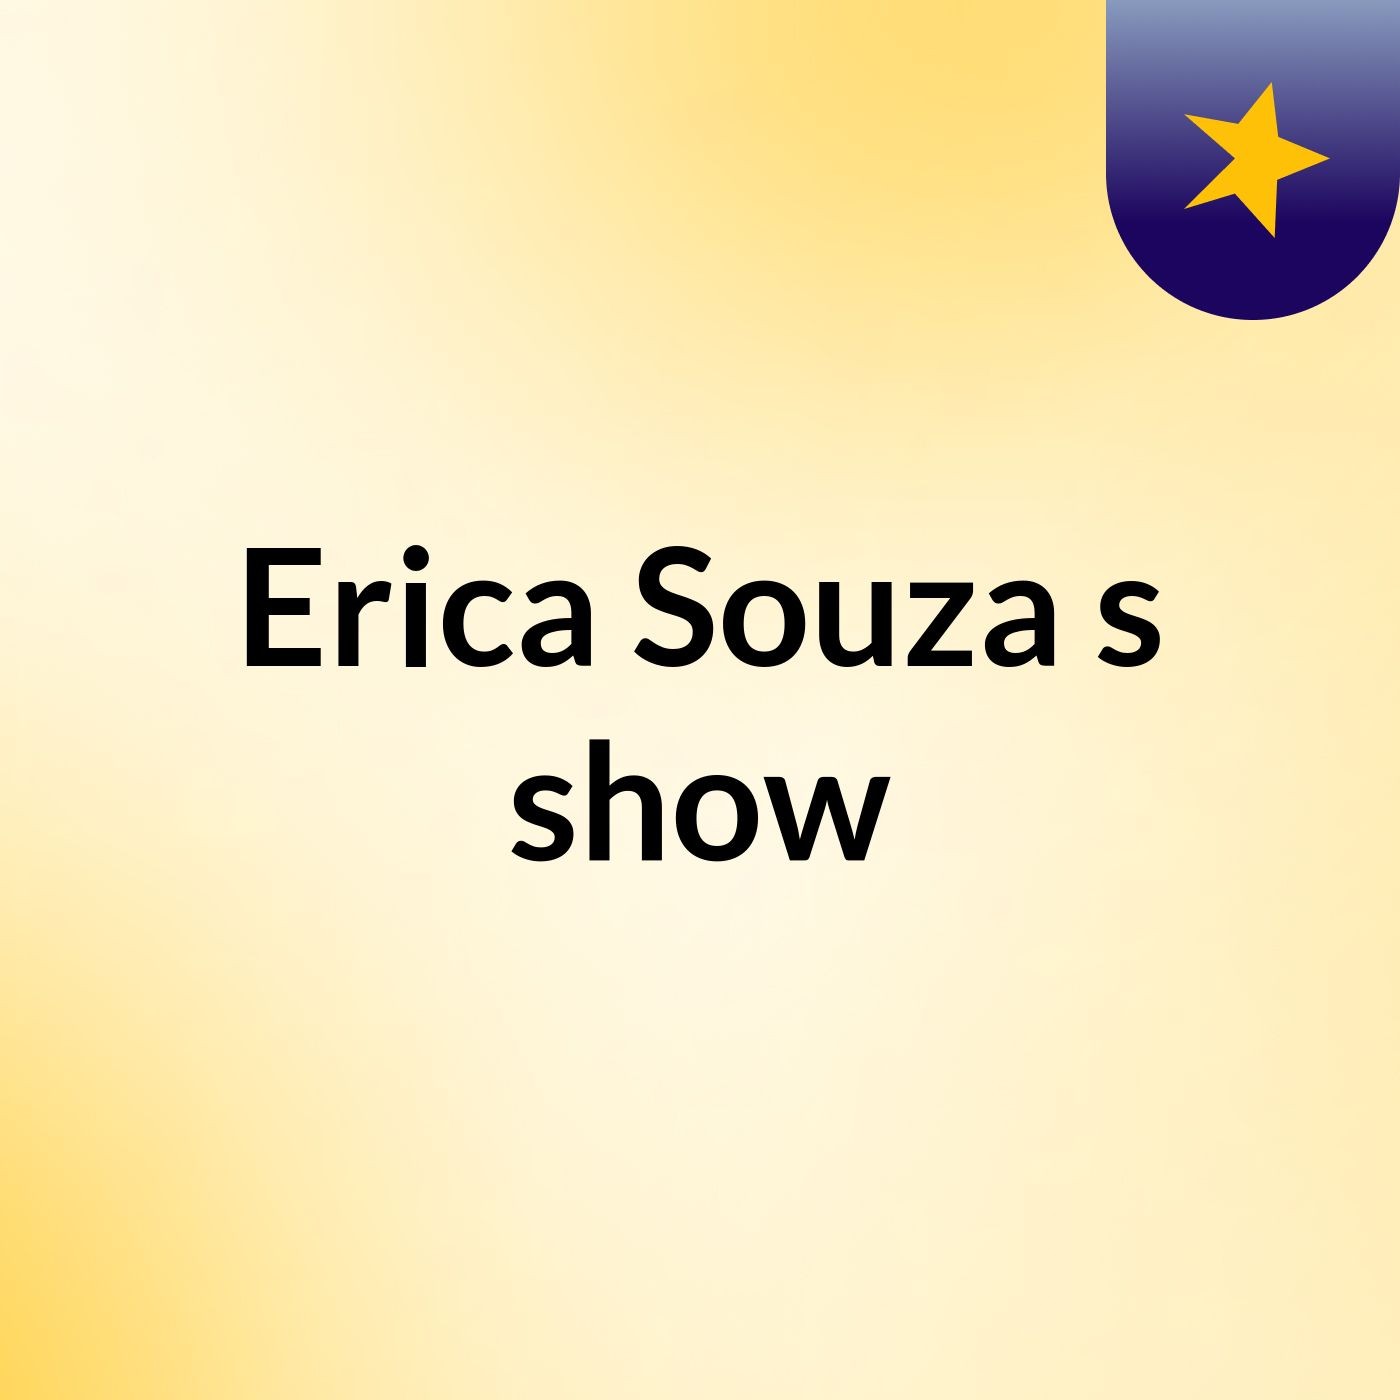 Erica Souza's show